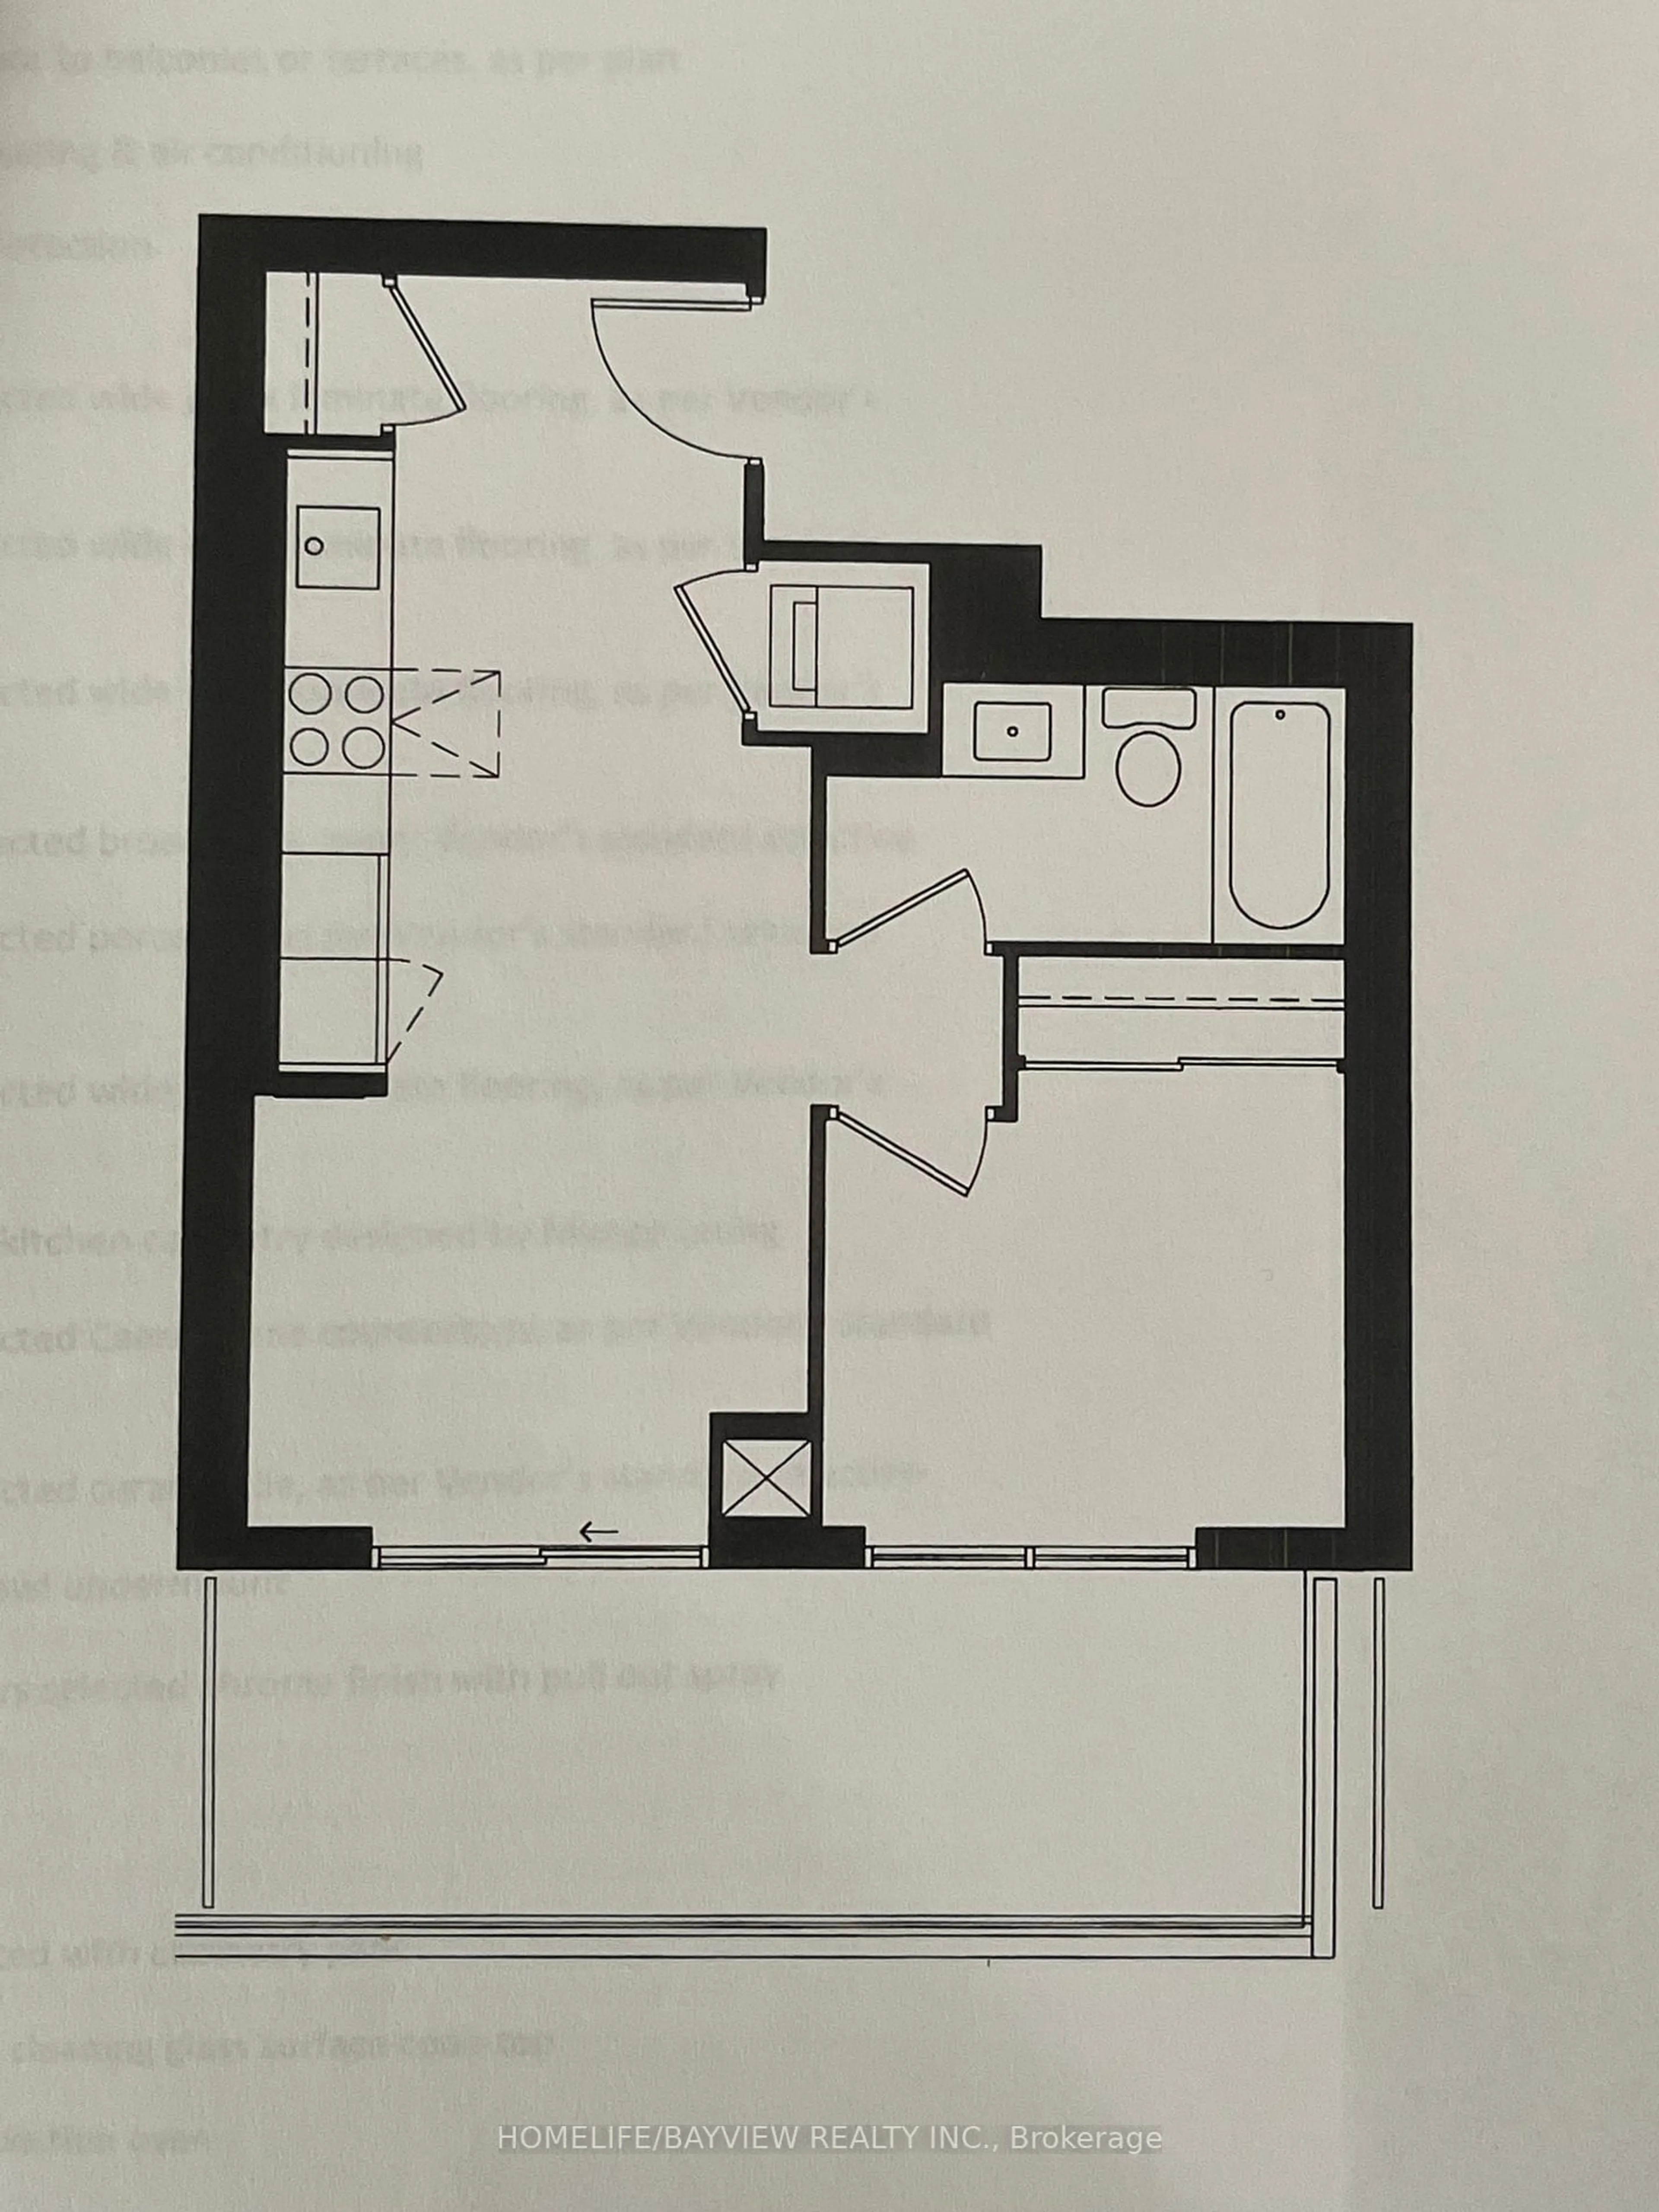 Floor plan for 2221 Yonge St #405, Toronto Ontario M4S 0B8